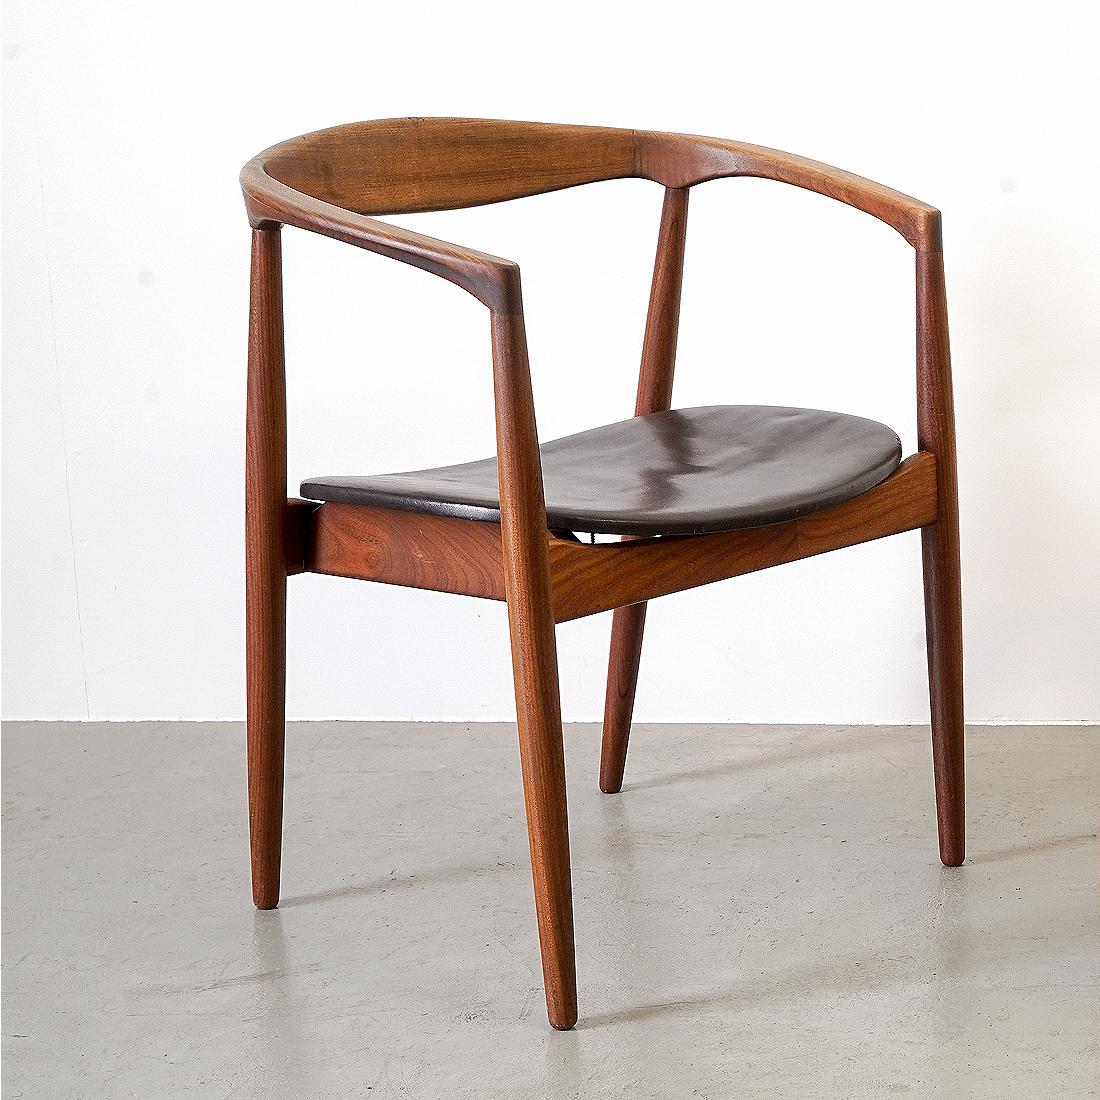 This midcentury vintage armchair was designed by the Danish designer Kai Kristiansen. He designed his 